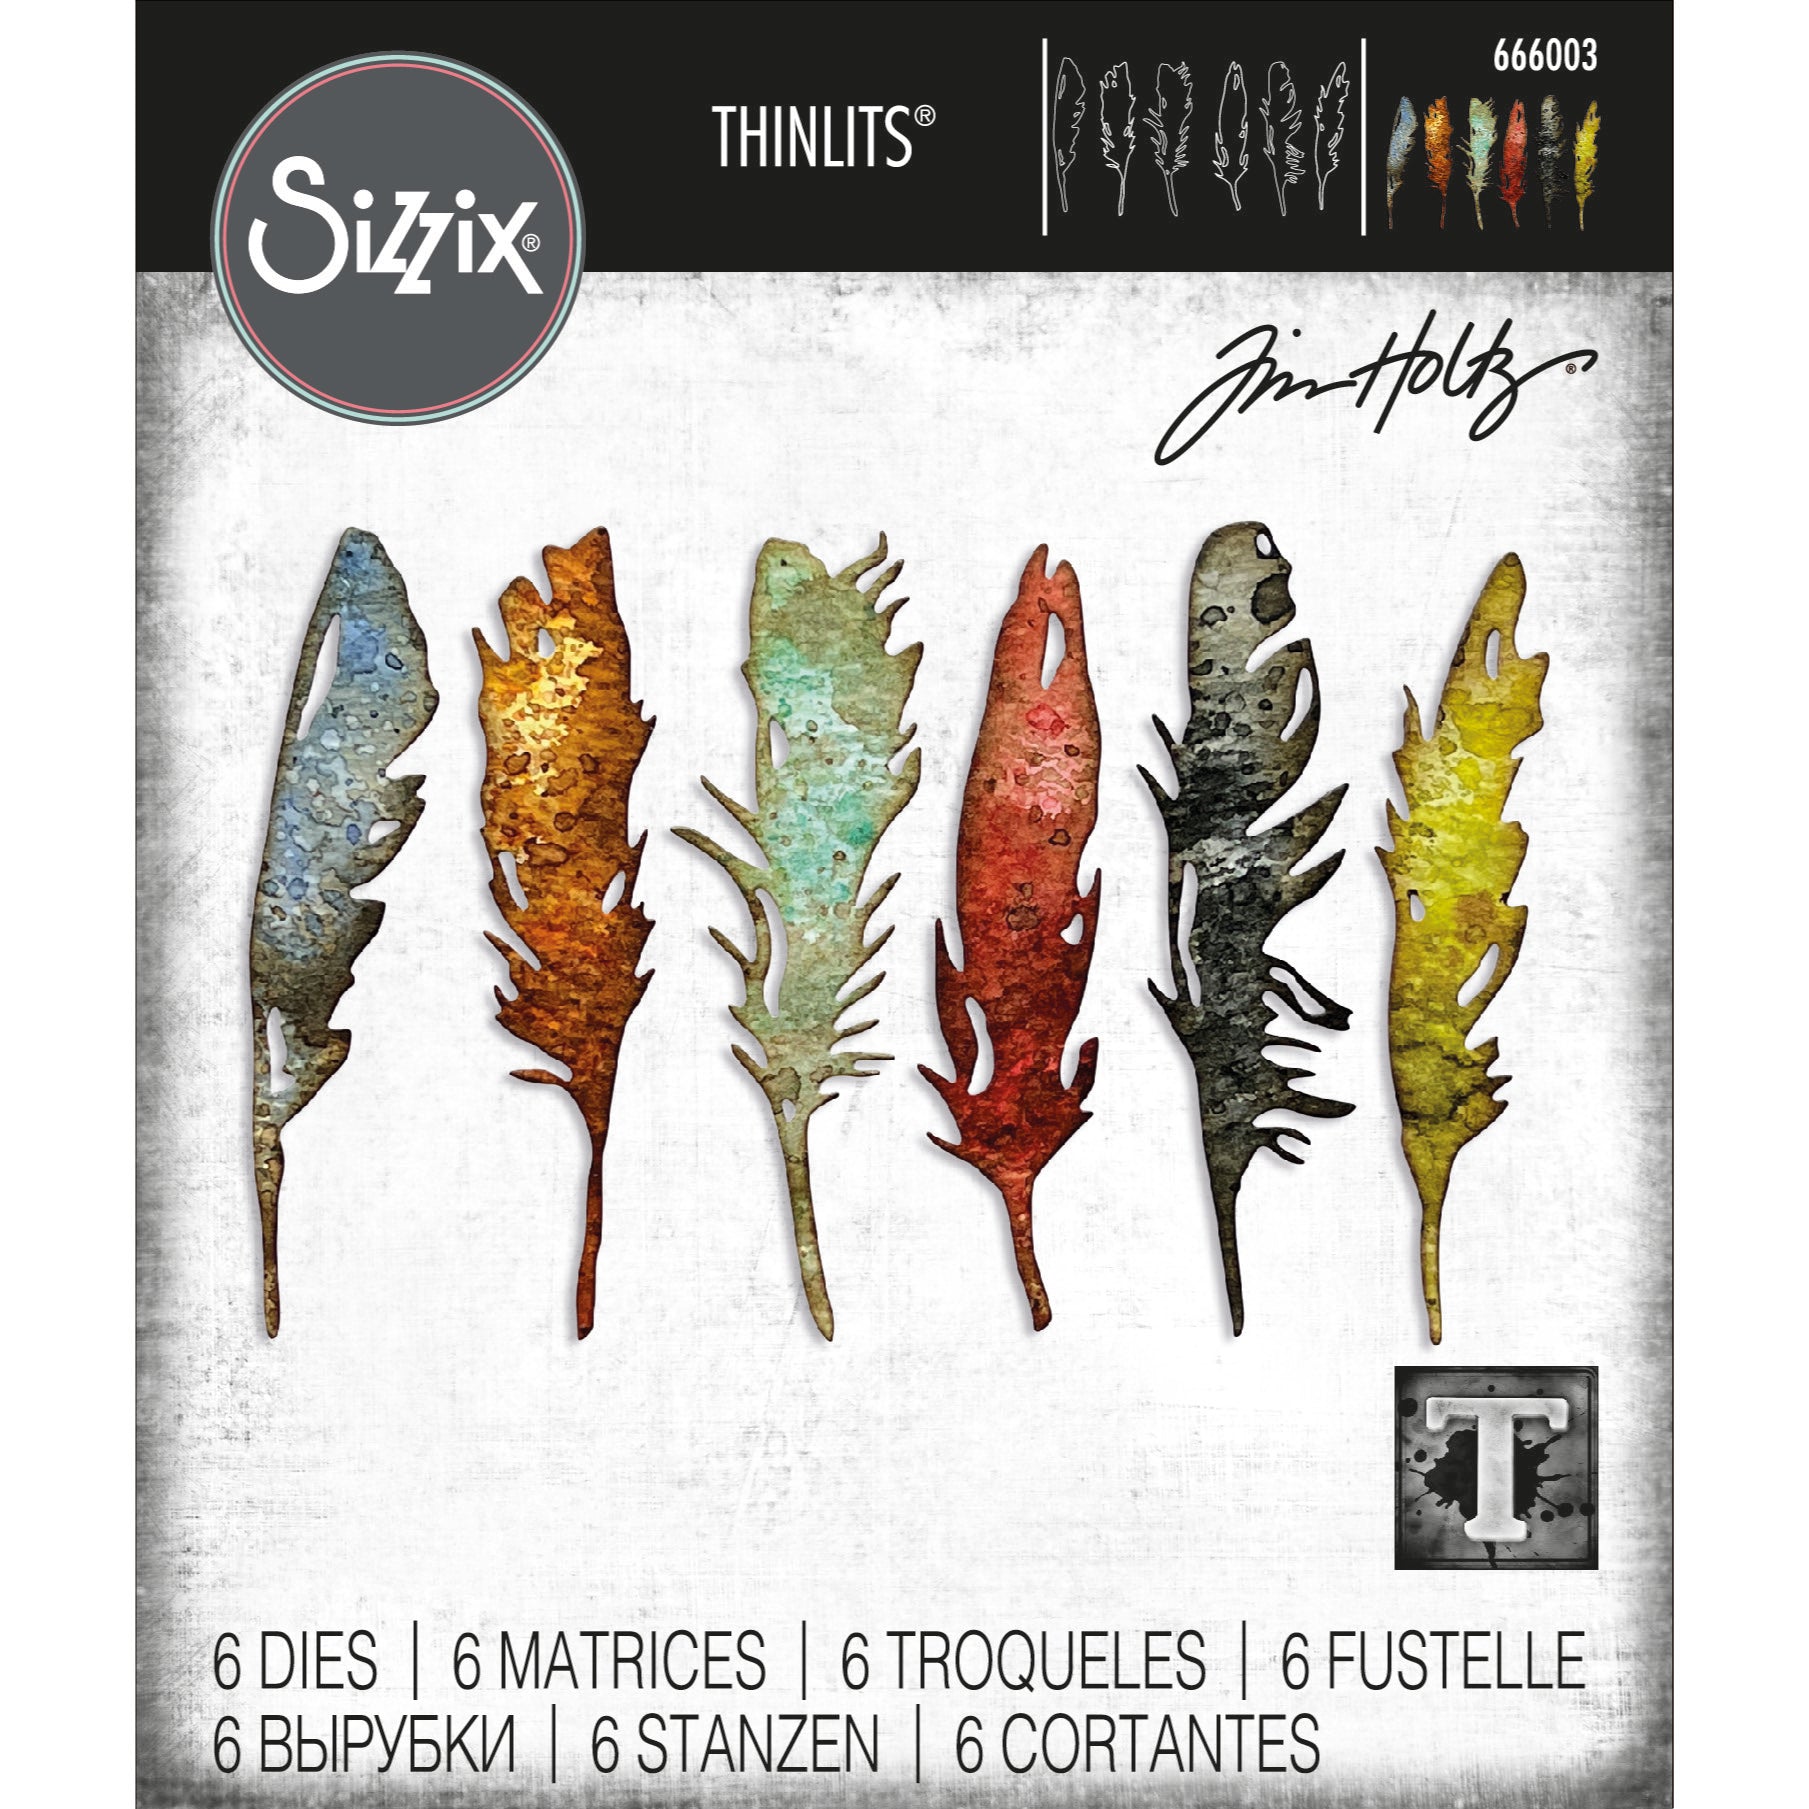 Sizzix Thinlits Die Set: Feathery, by Tim Holtz (666003)